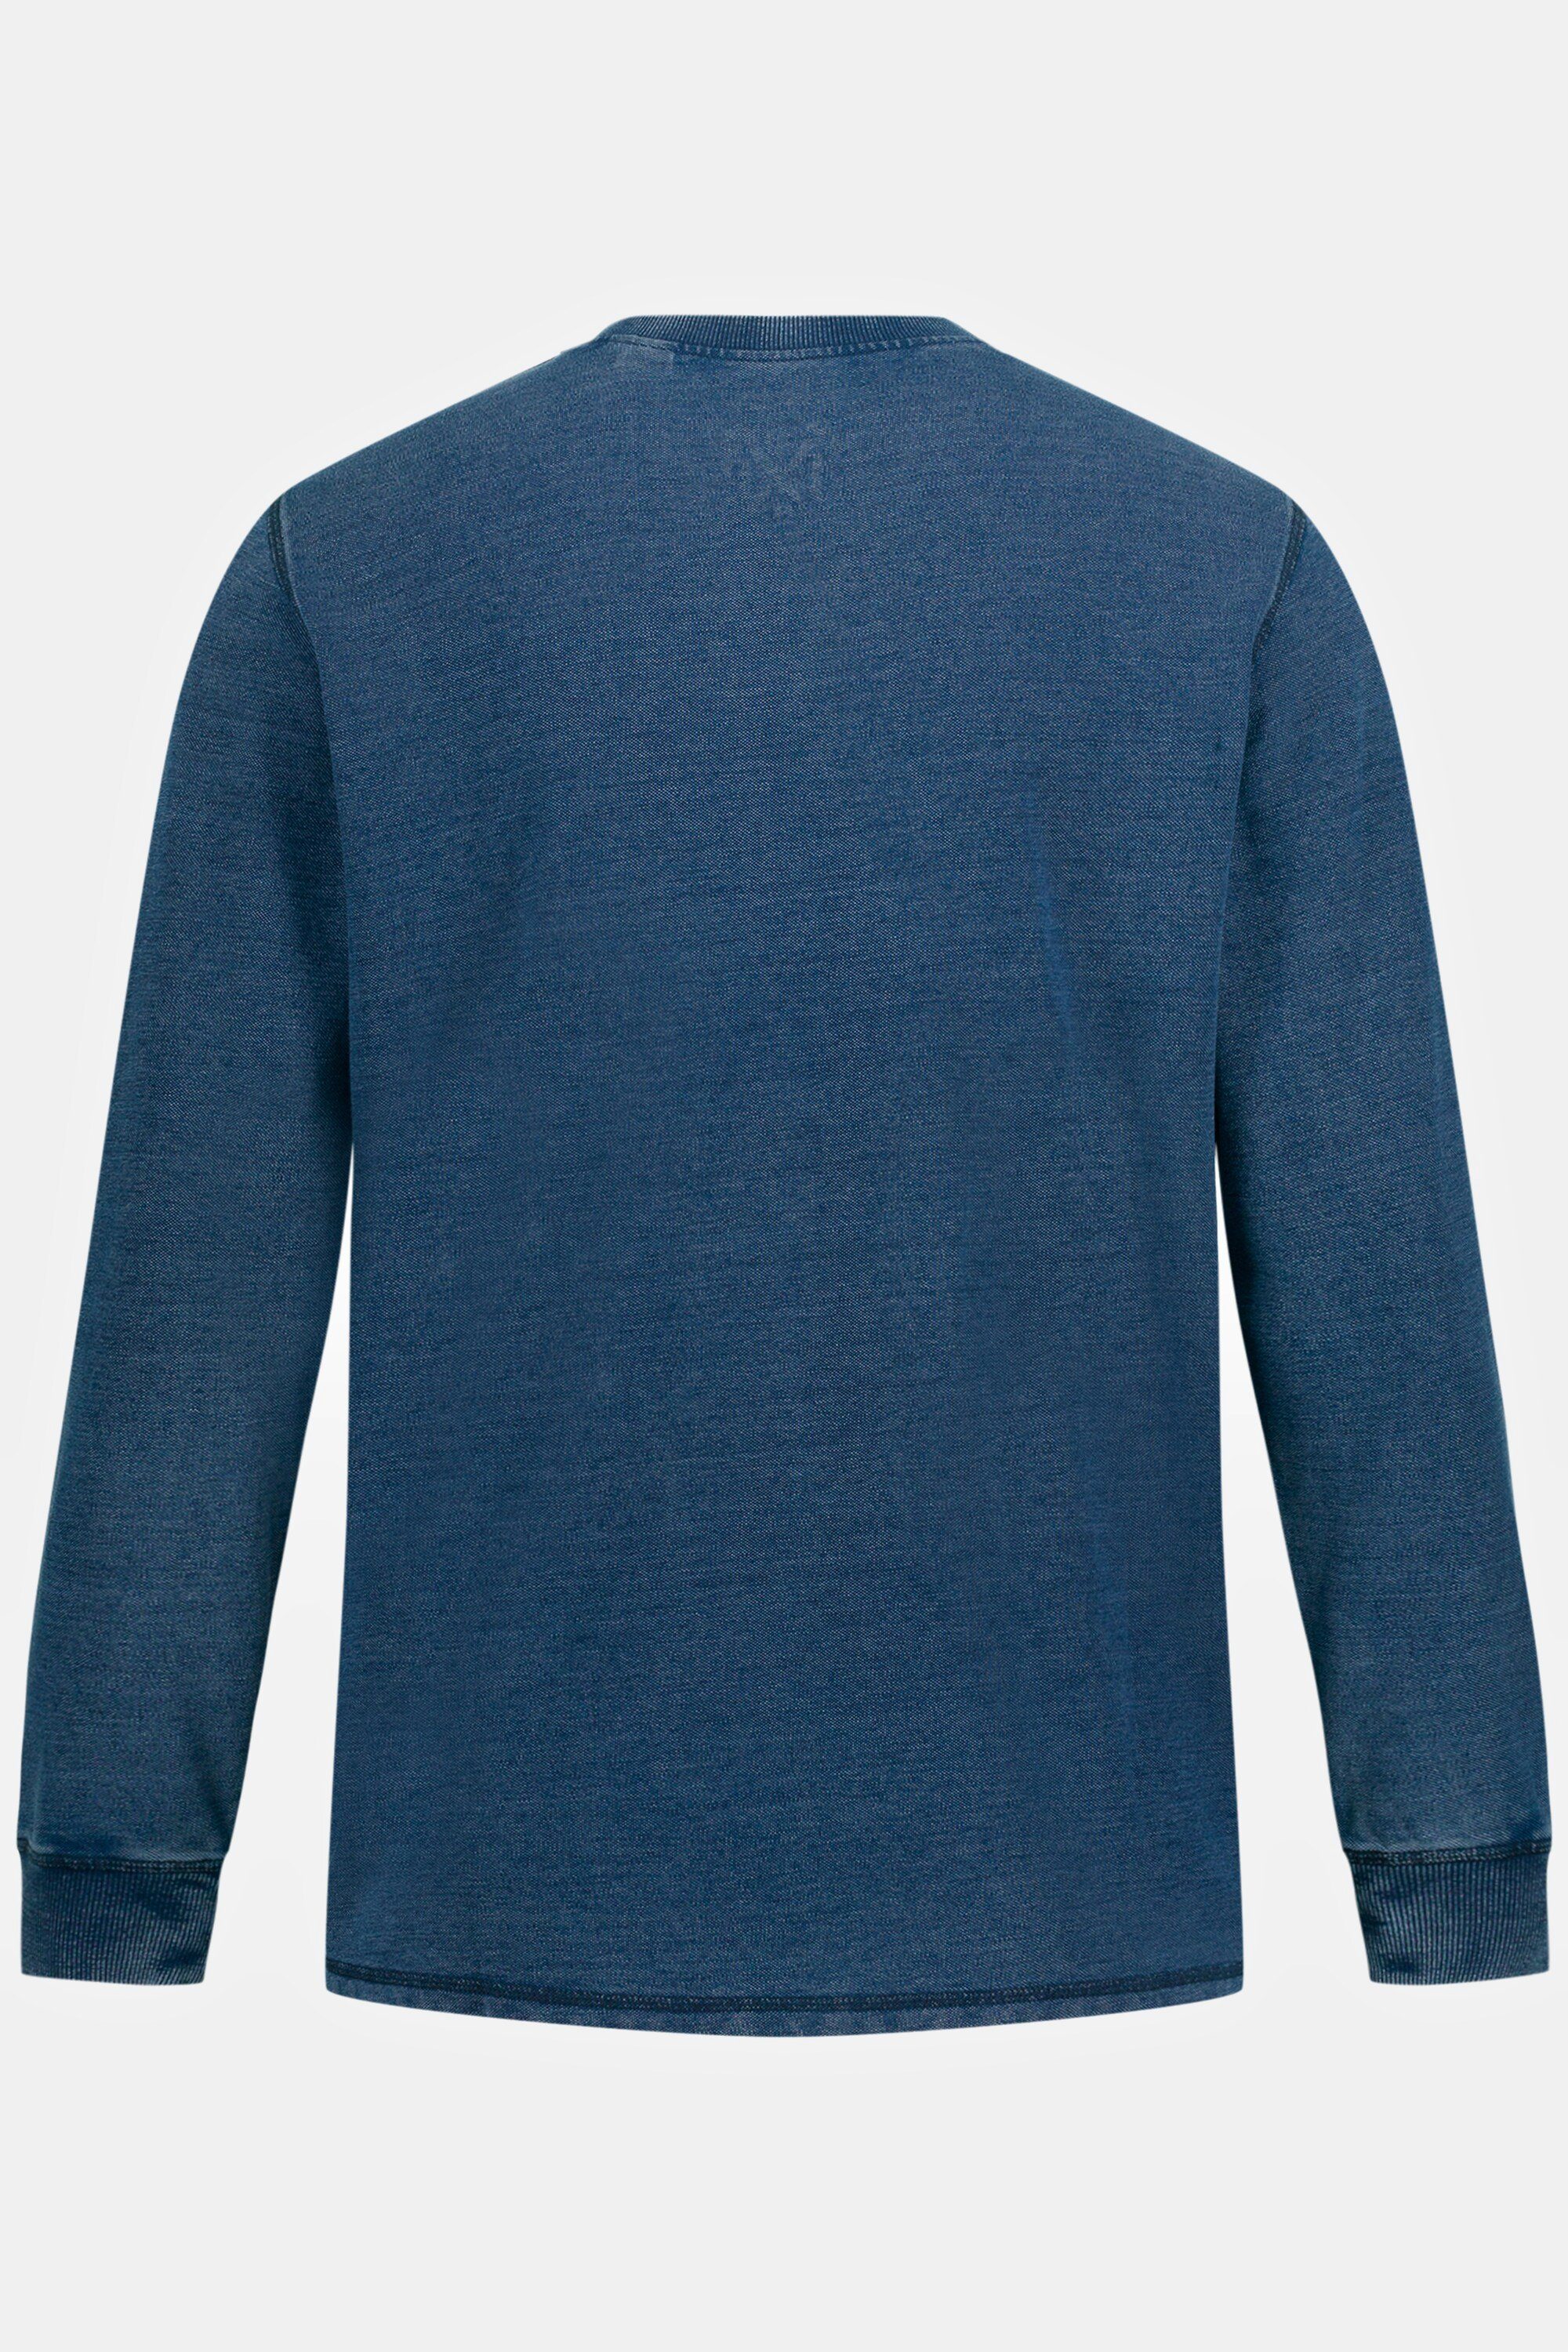 JP1880 T-Shirt Langarm-Henley Piqué Vintage Look Rundhals